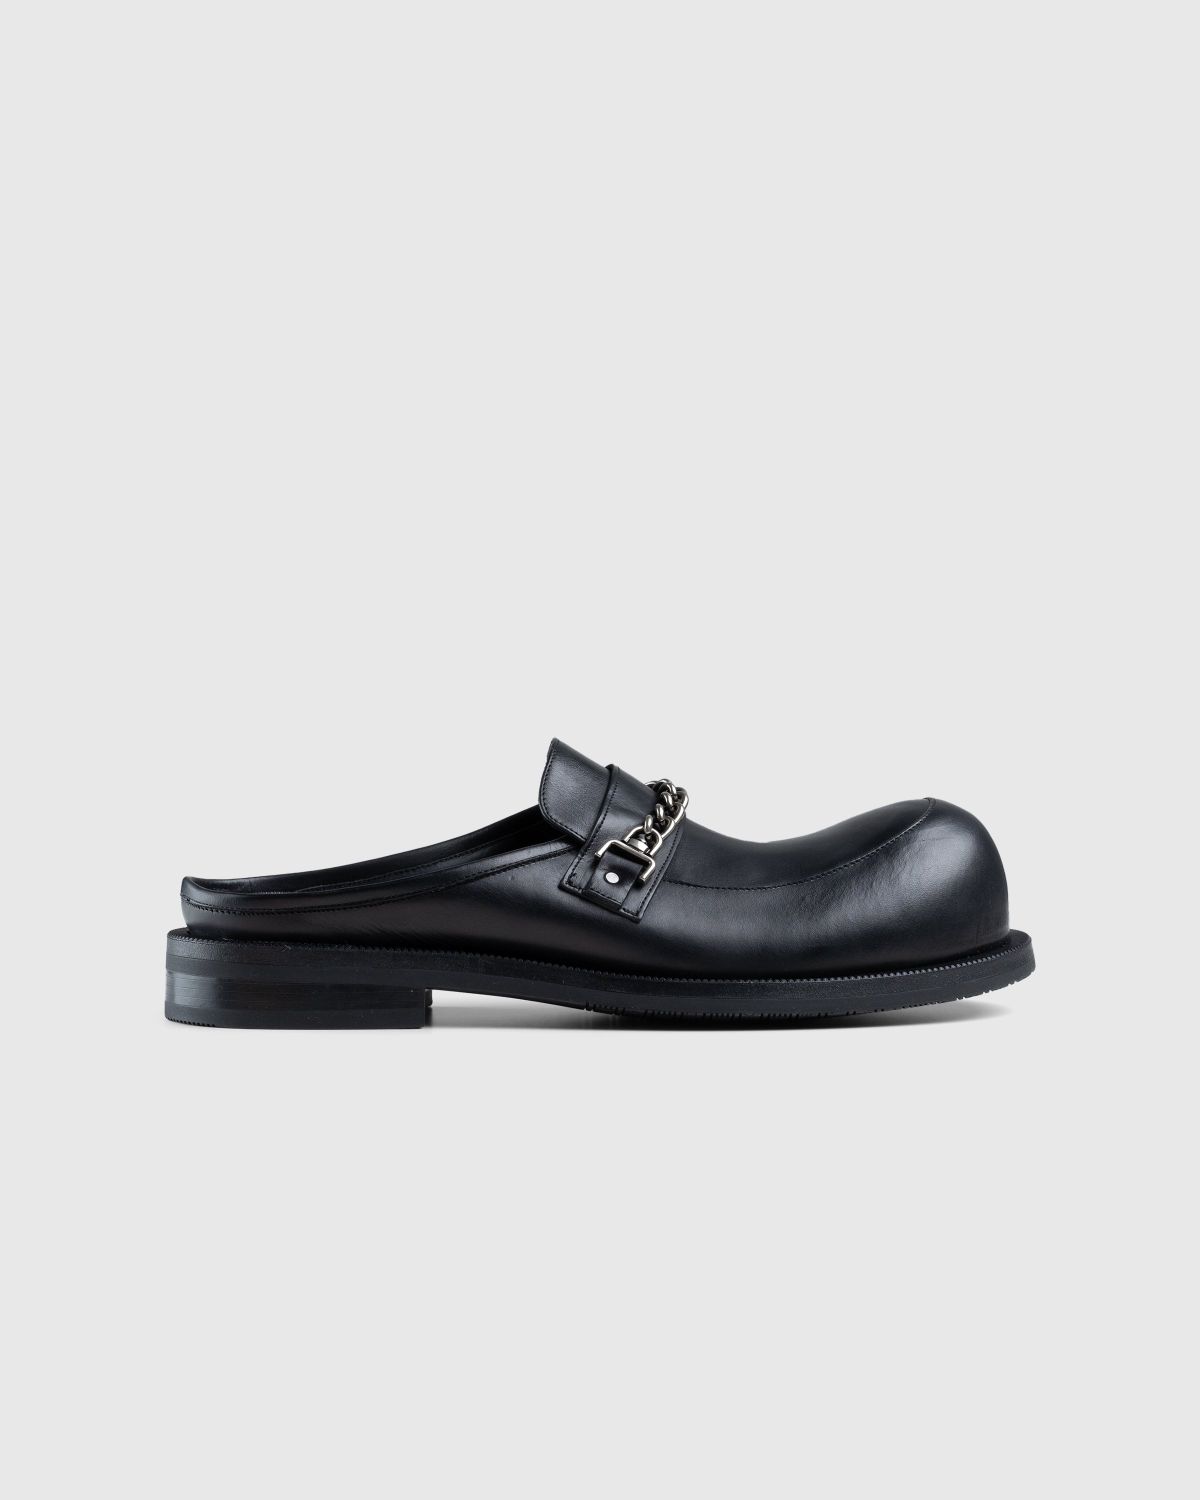 Martine Rose – Bulb Toe Chain Mule Black - Sandals & Slides - Black - Image 1